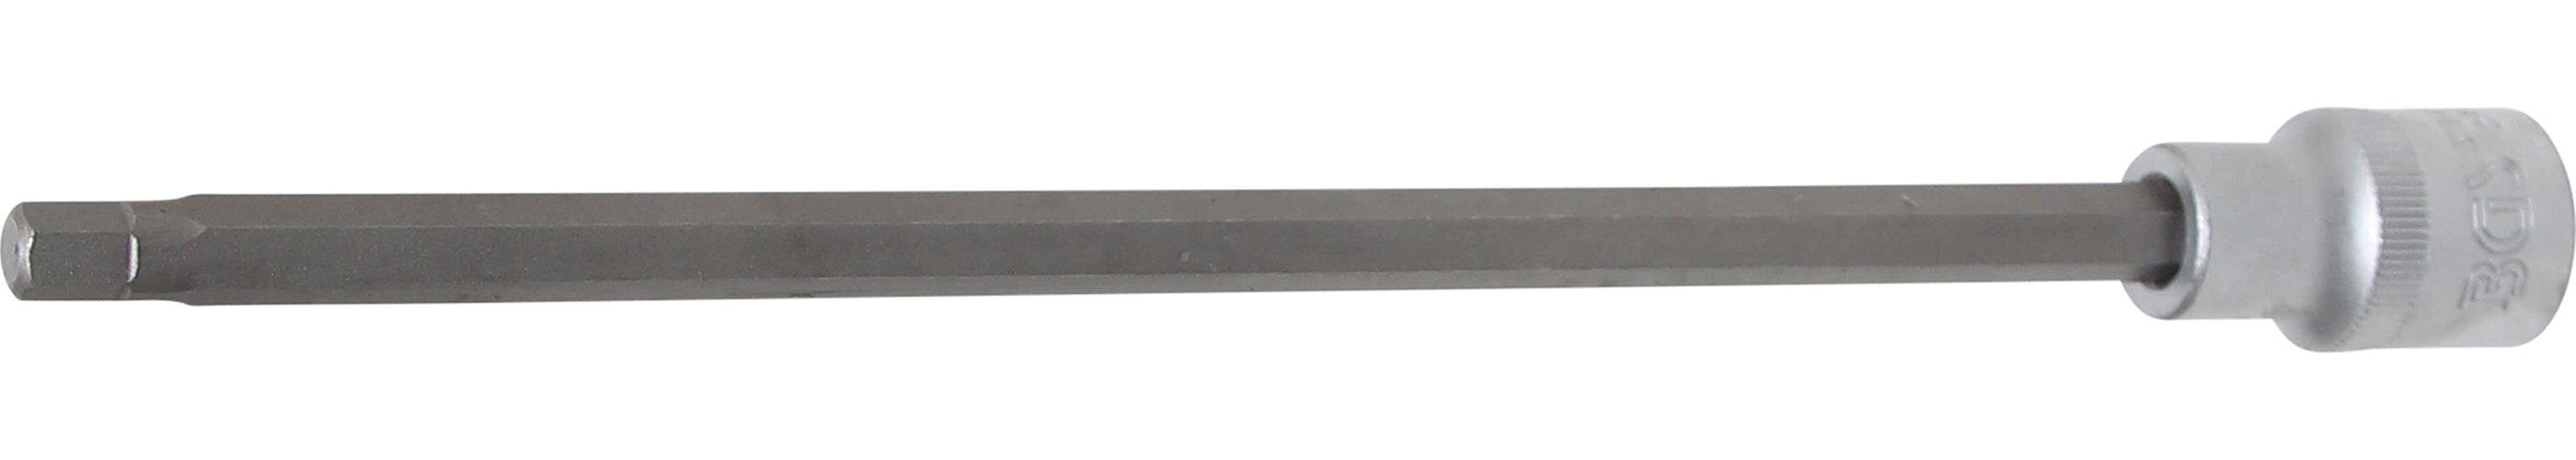 BGS technic Sechskant-Bit Bit-Einsatz, Länge 230 mm, Antrieb Innenvierkant 12,5 mm (1/2), Innensechskant 7 mm